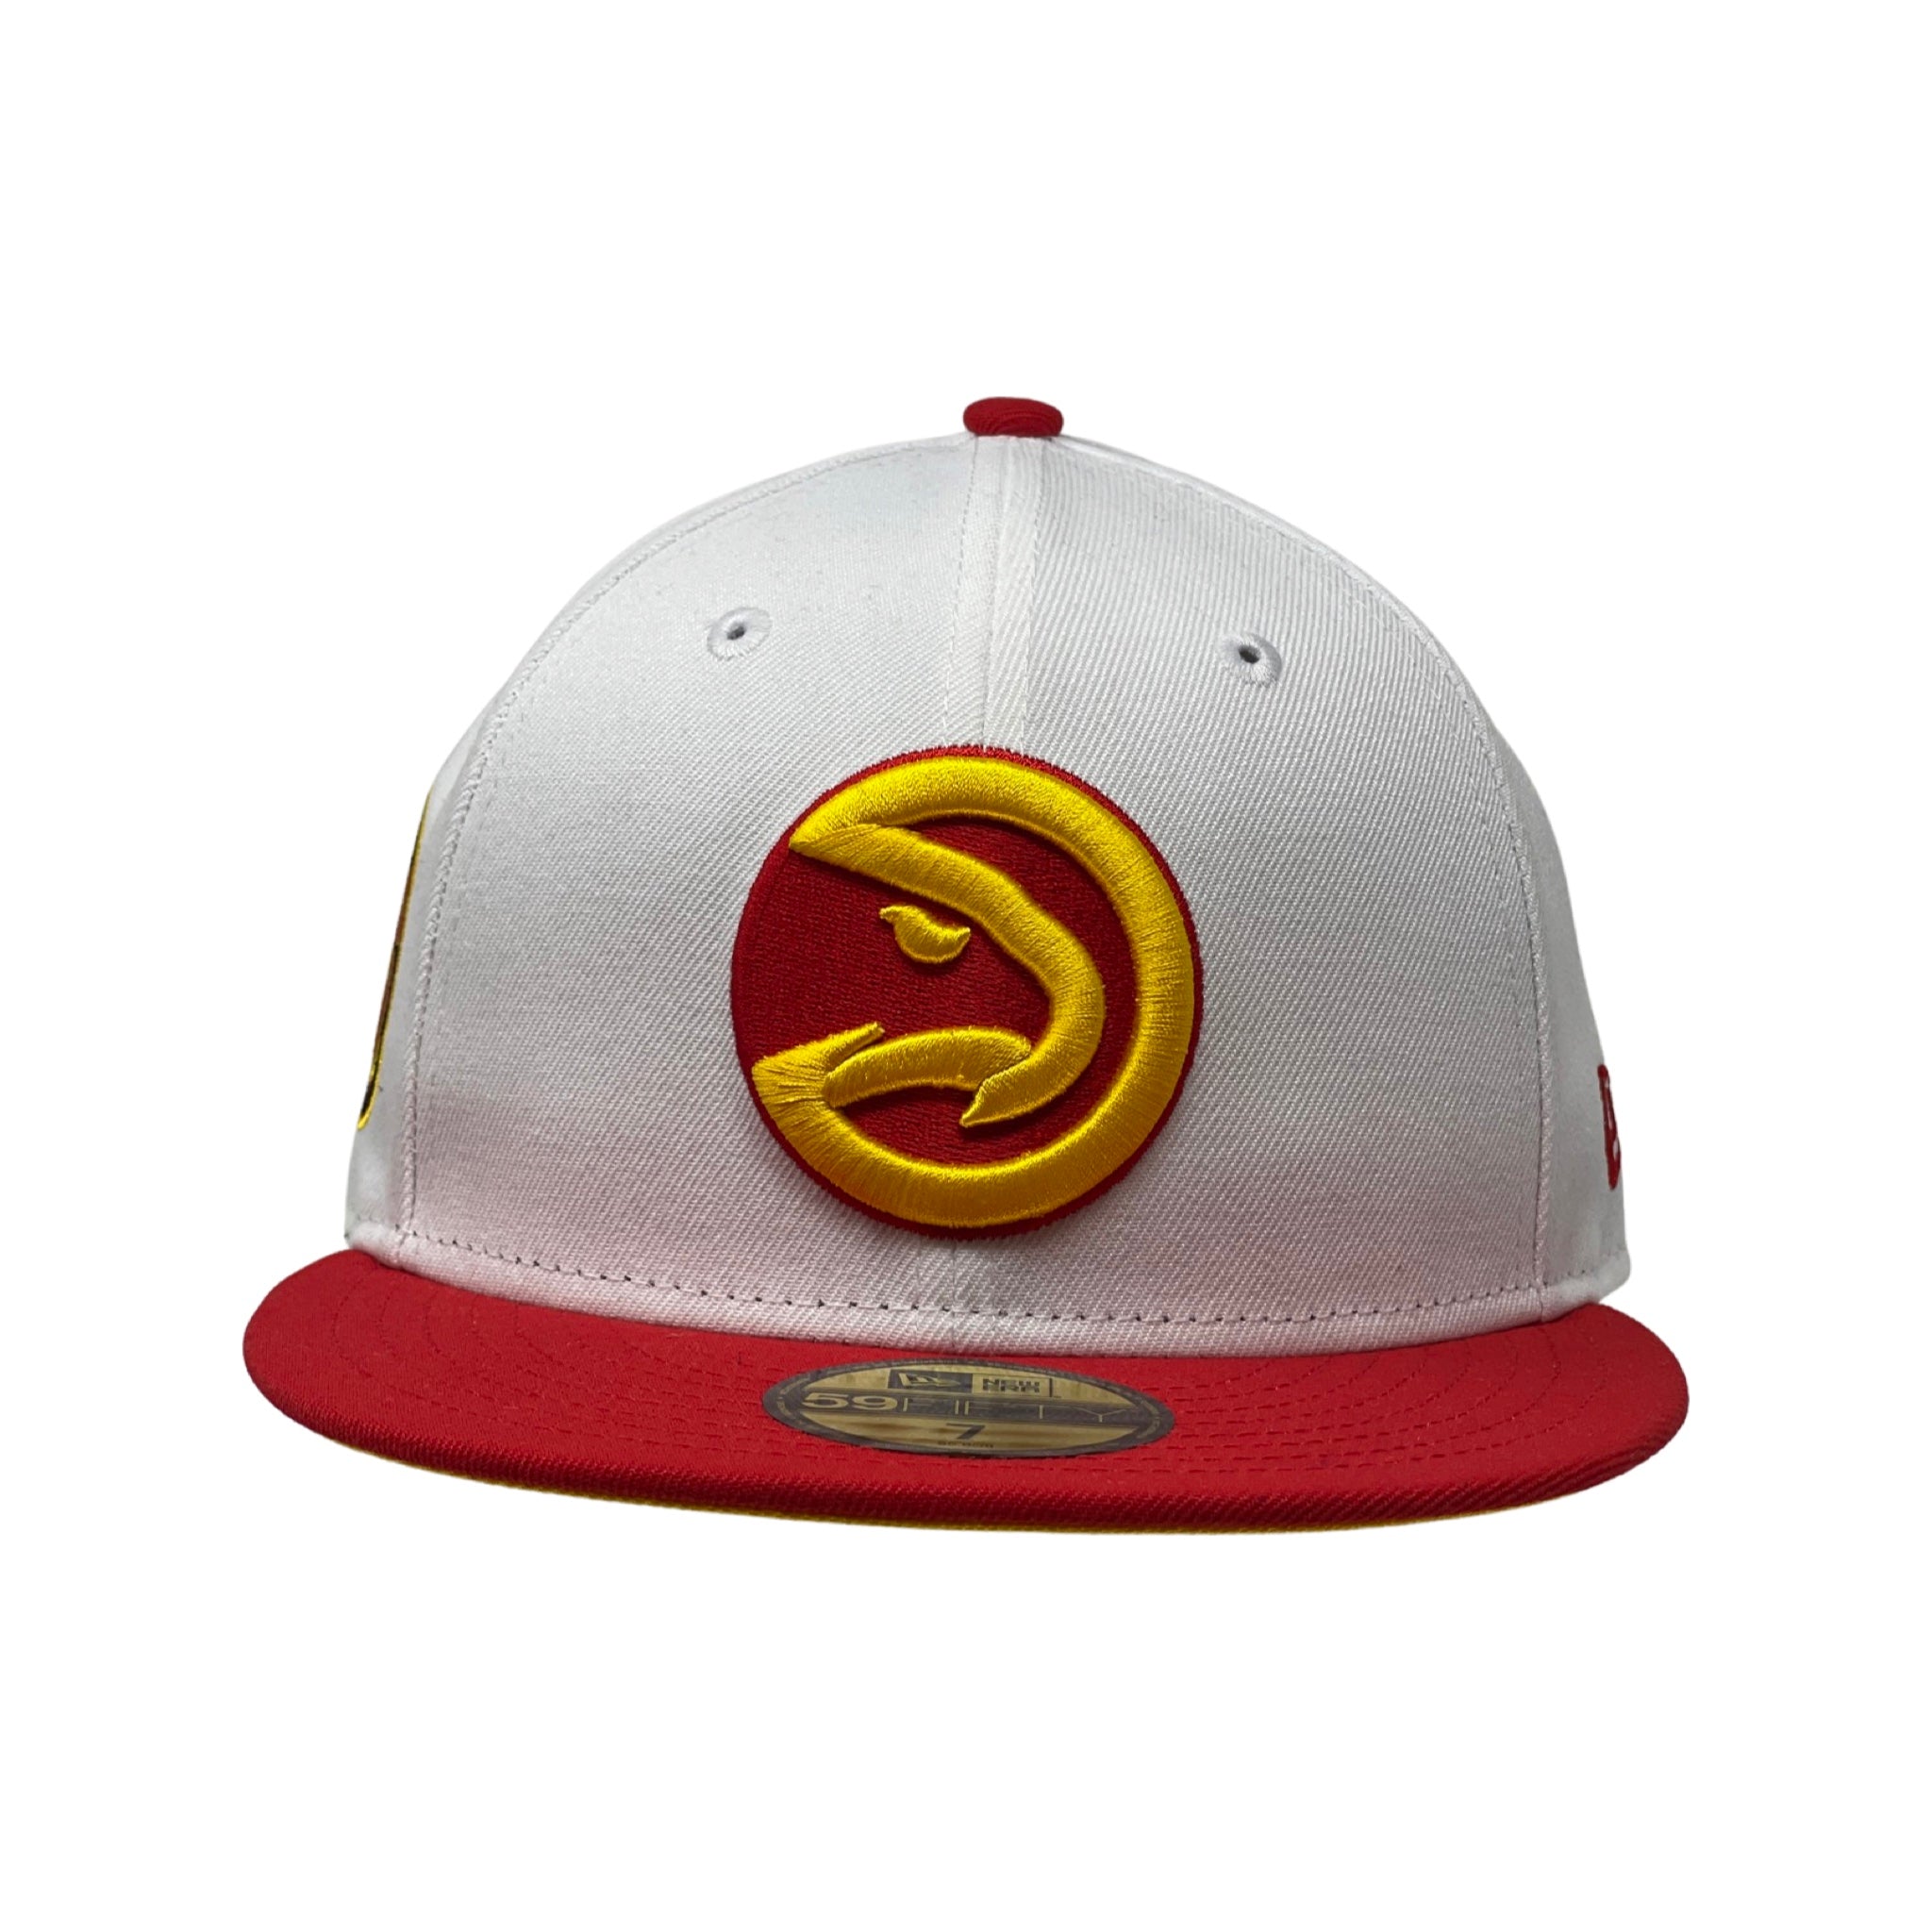 New Era Hat - Atlanta Hawks - White / Red